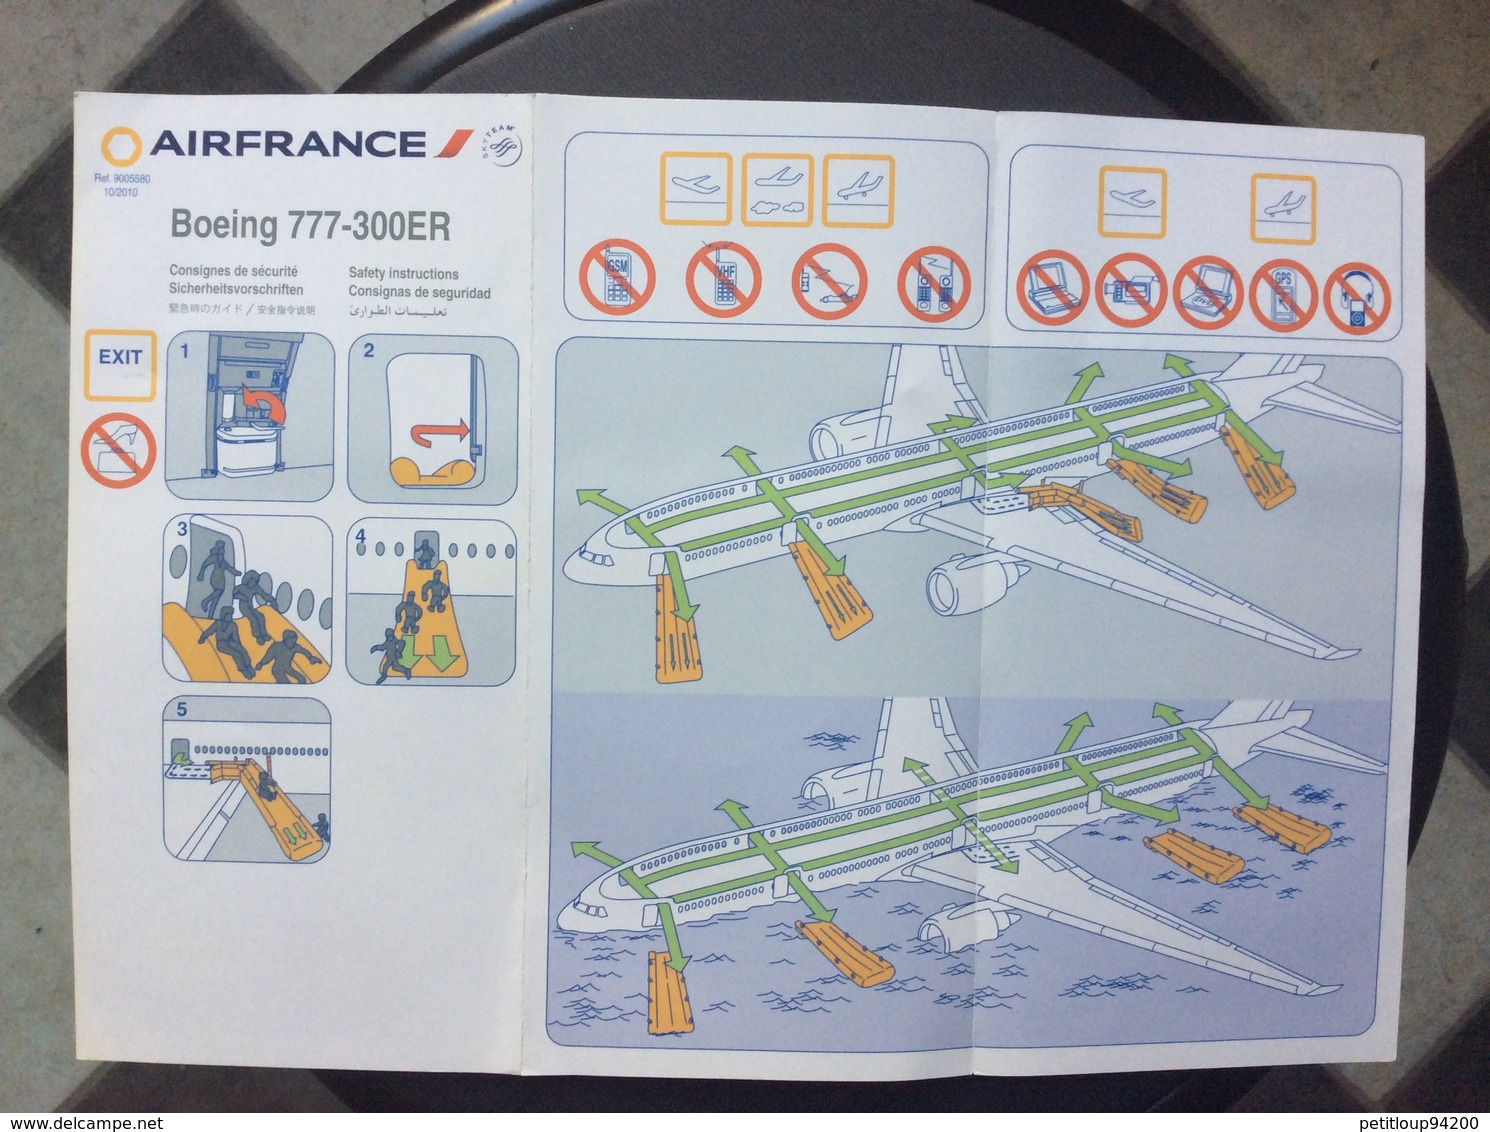 CONSIGNES DE SECURITE / SAFETY CARD  *Boeing B777-300 ER  AIR FRANCE - Sicherheitsinfos